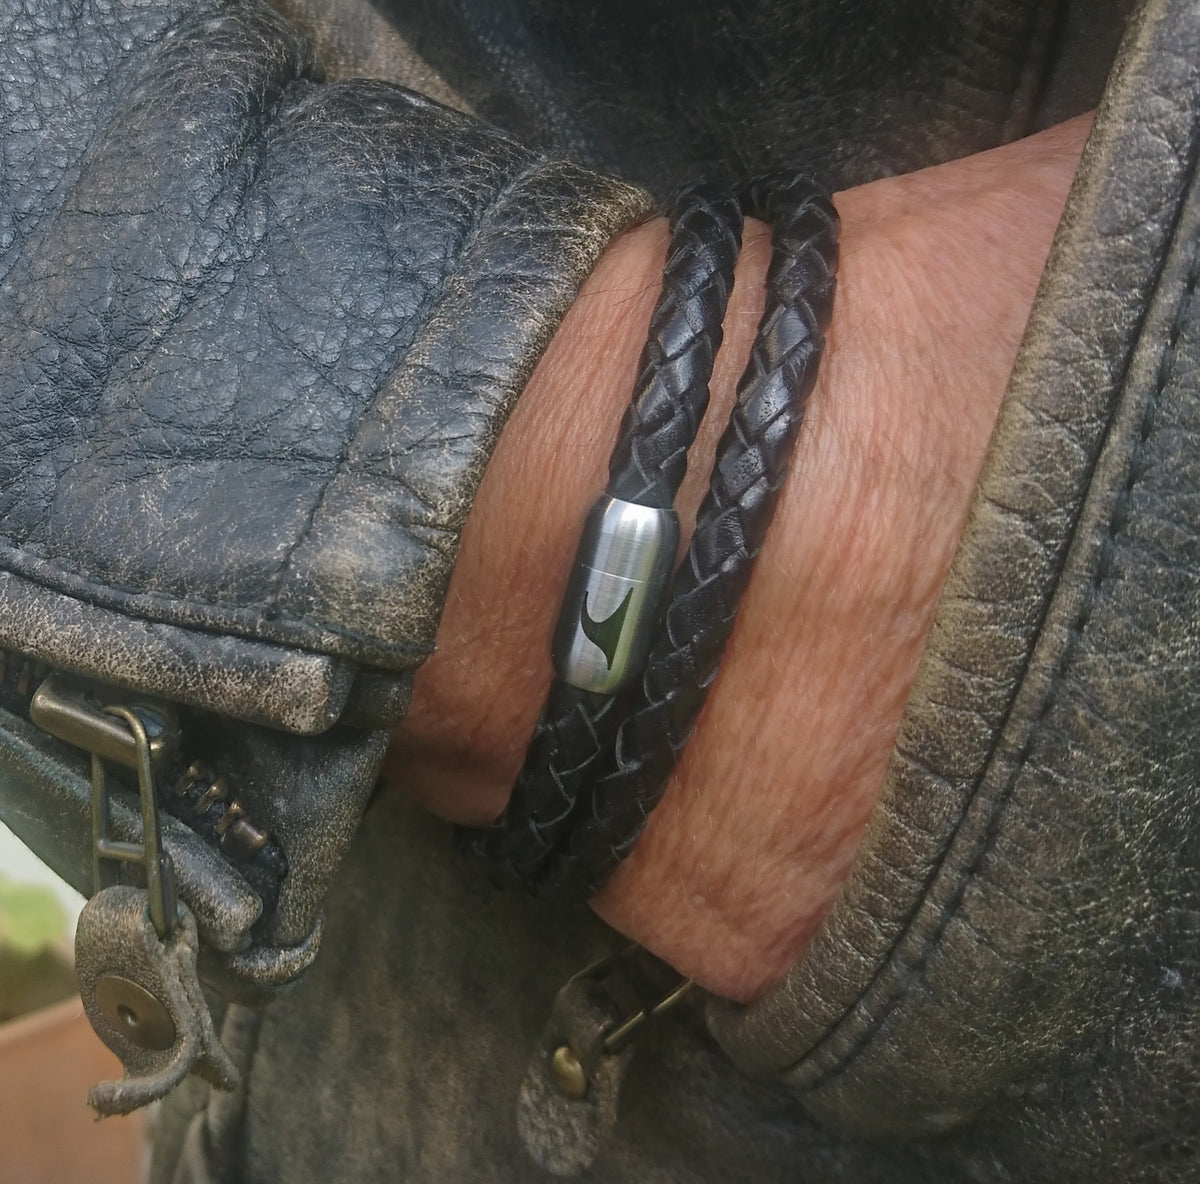 Herren-Leder-Armband-hawaii-schwarz-geflochten-Edelstahlverschluss-getragen-wavepirate-shop-f-1